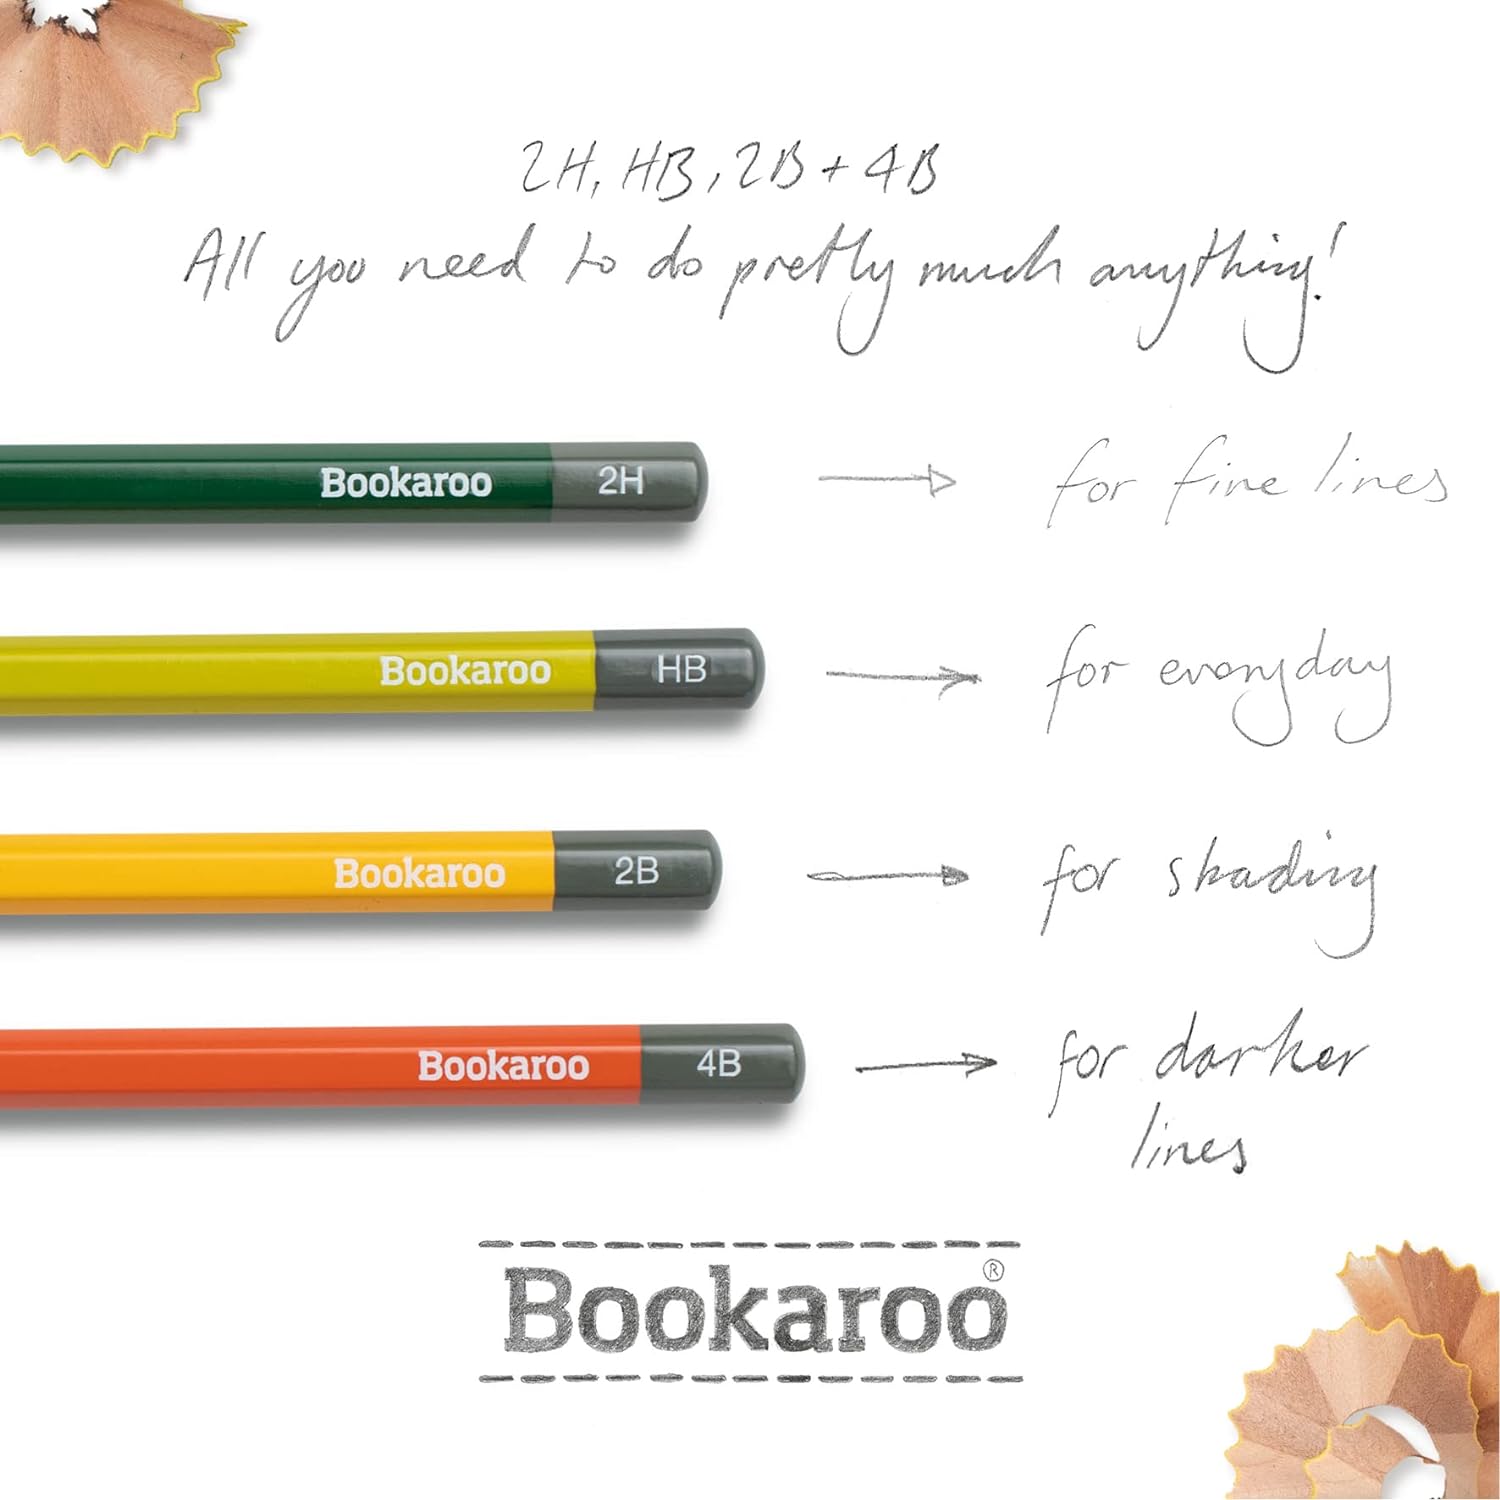 Bookaroo Graphite Pencils Greens